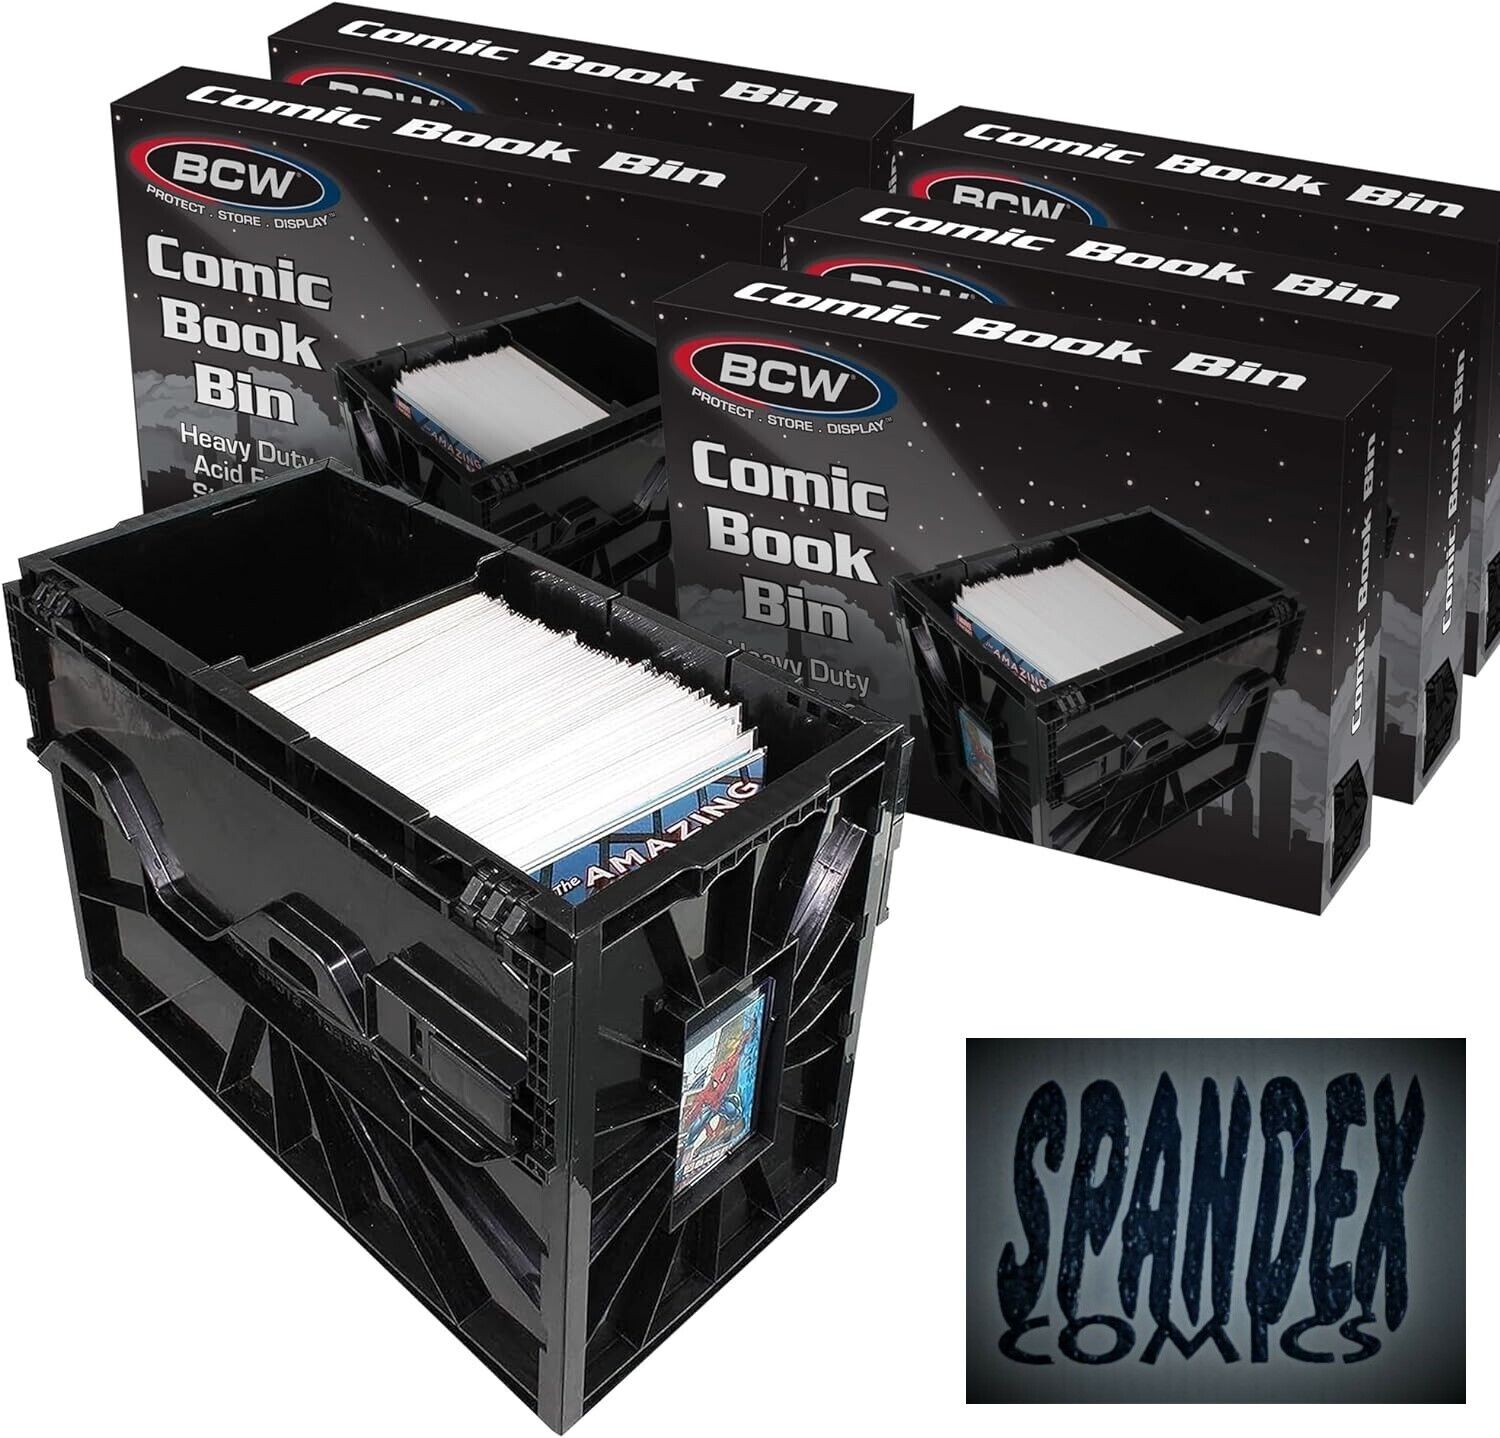 Case of 5 BCW Black Short Comic Book Box Bins - Heavy Duty Acid Free Plastic